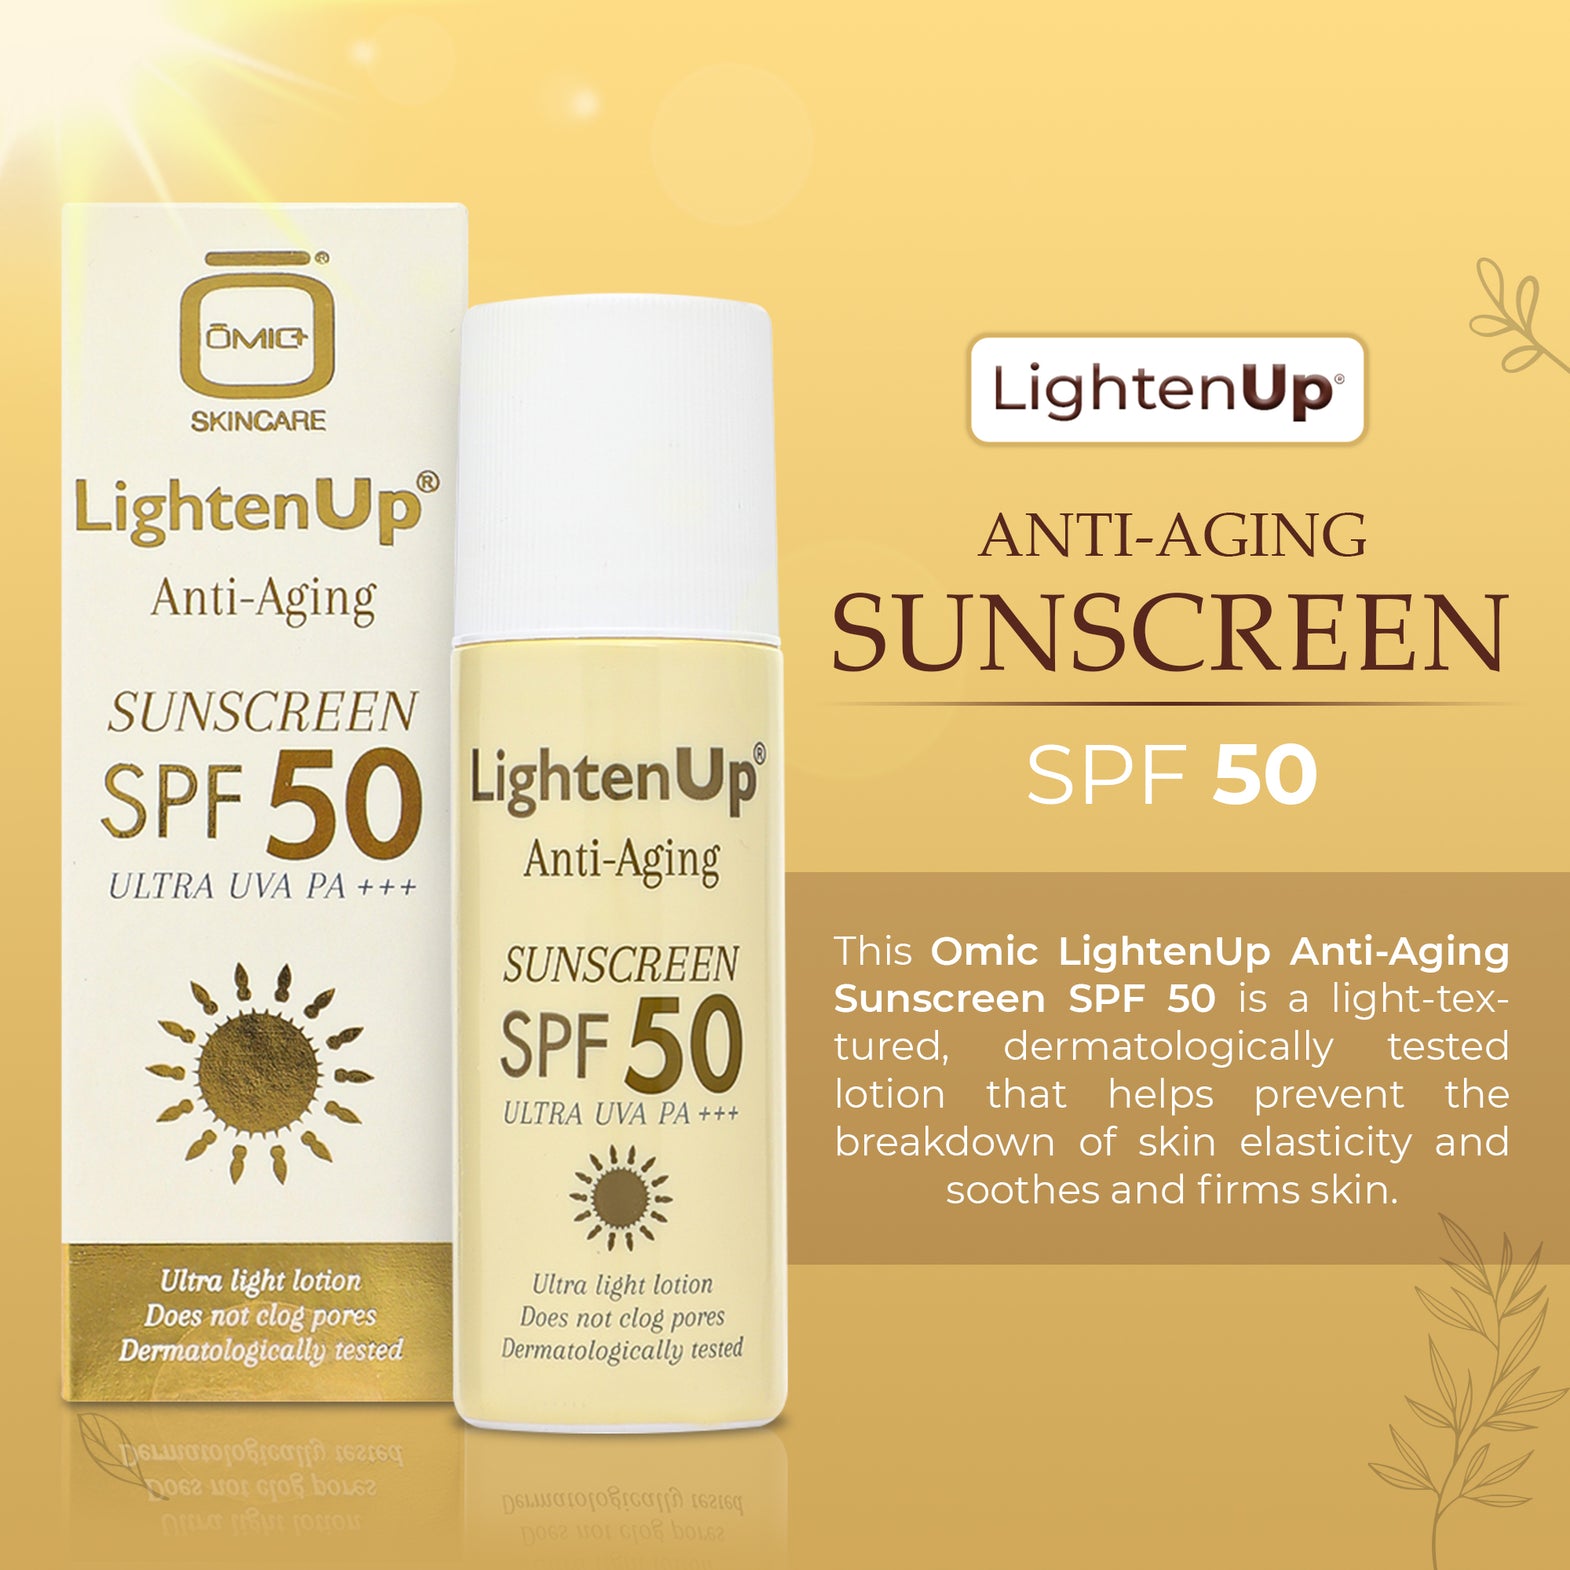 LightenUp Anti-Aging Sunscreen SPF-50 ULTRA UVA PA++ (Roll On) 90ml